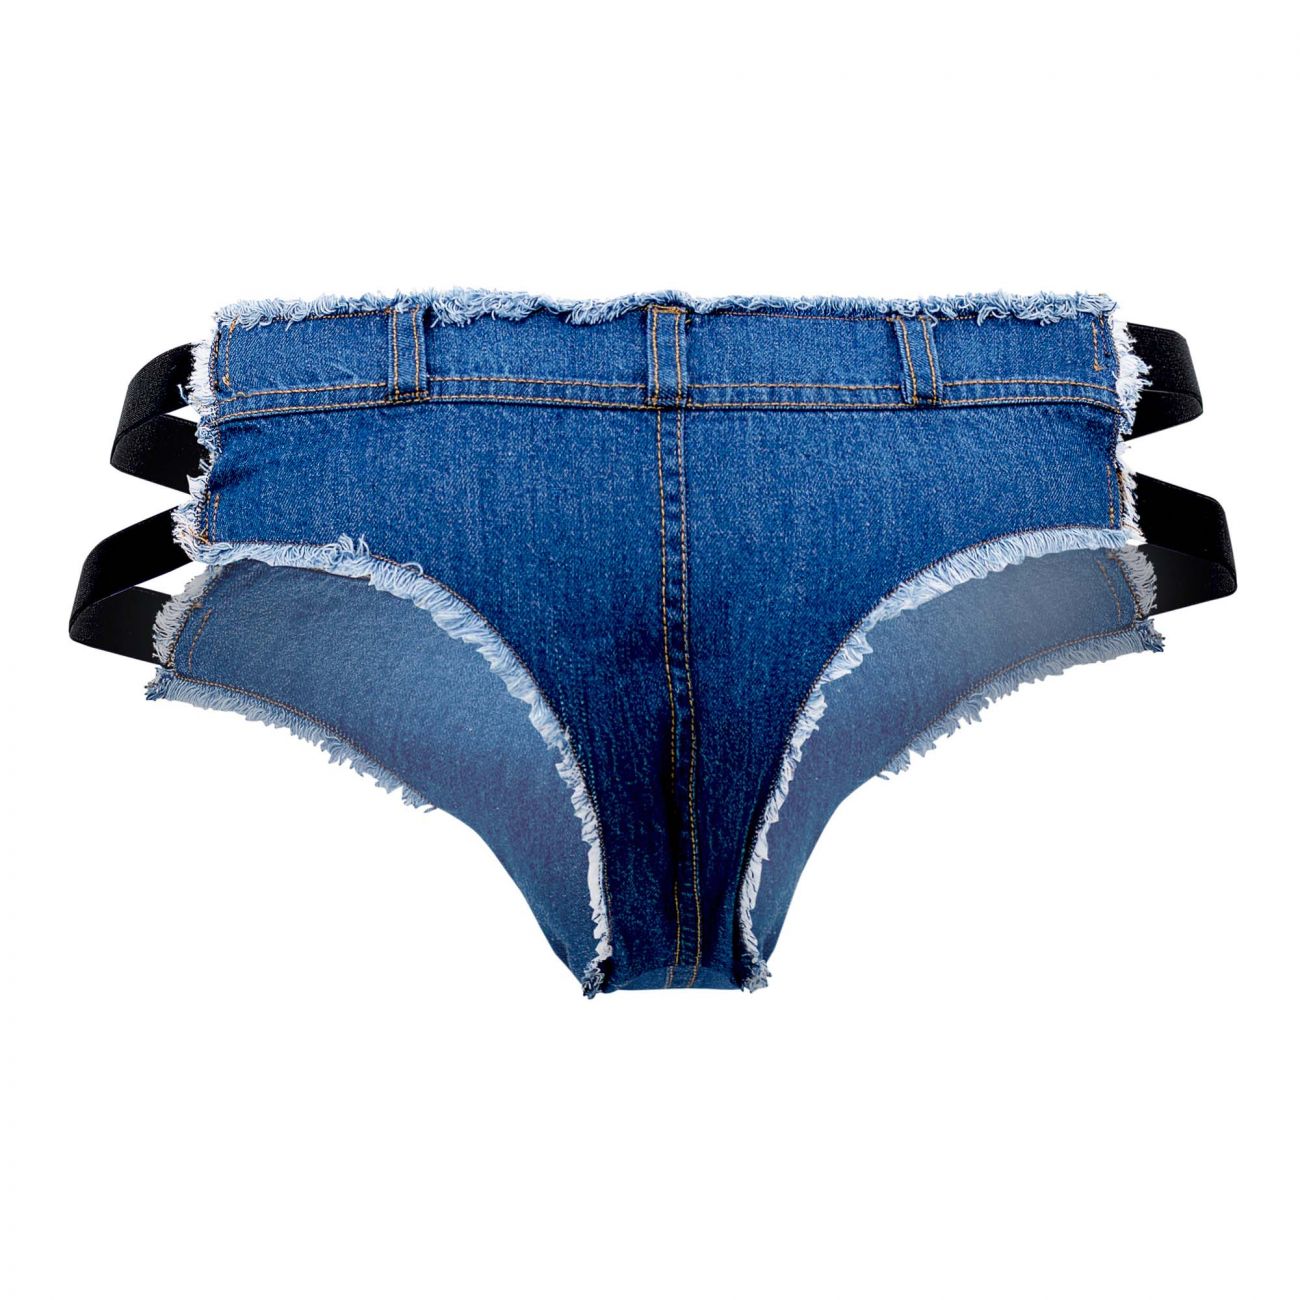 CandyMan 99452 American Jeans Thongs